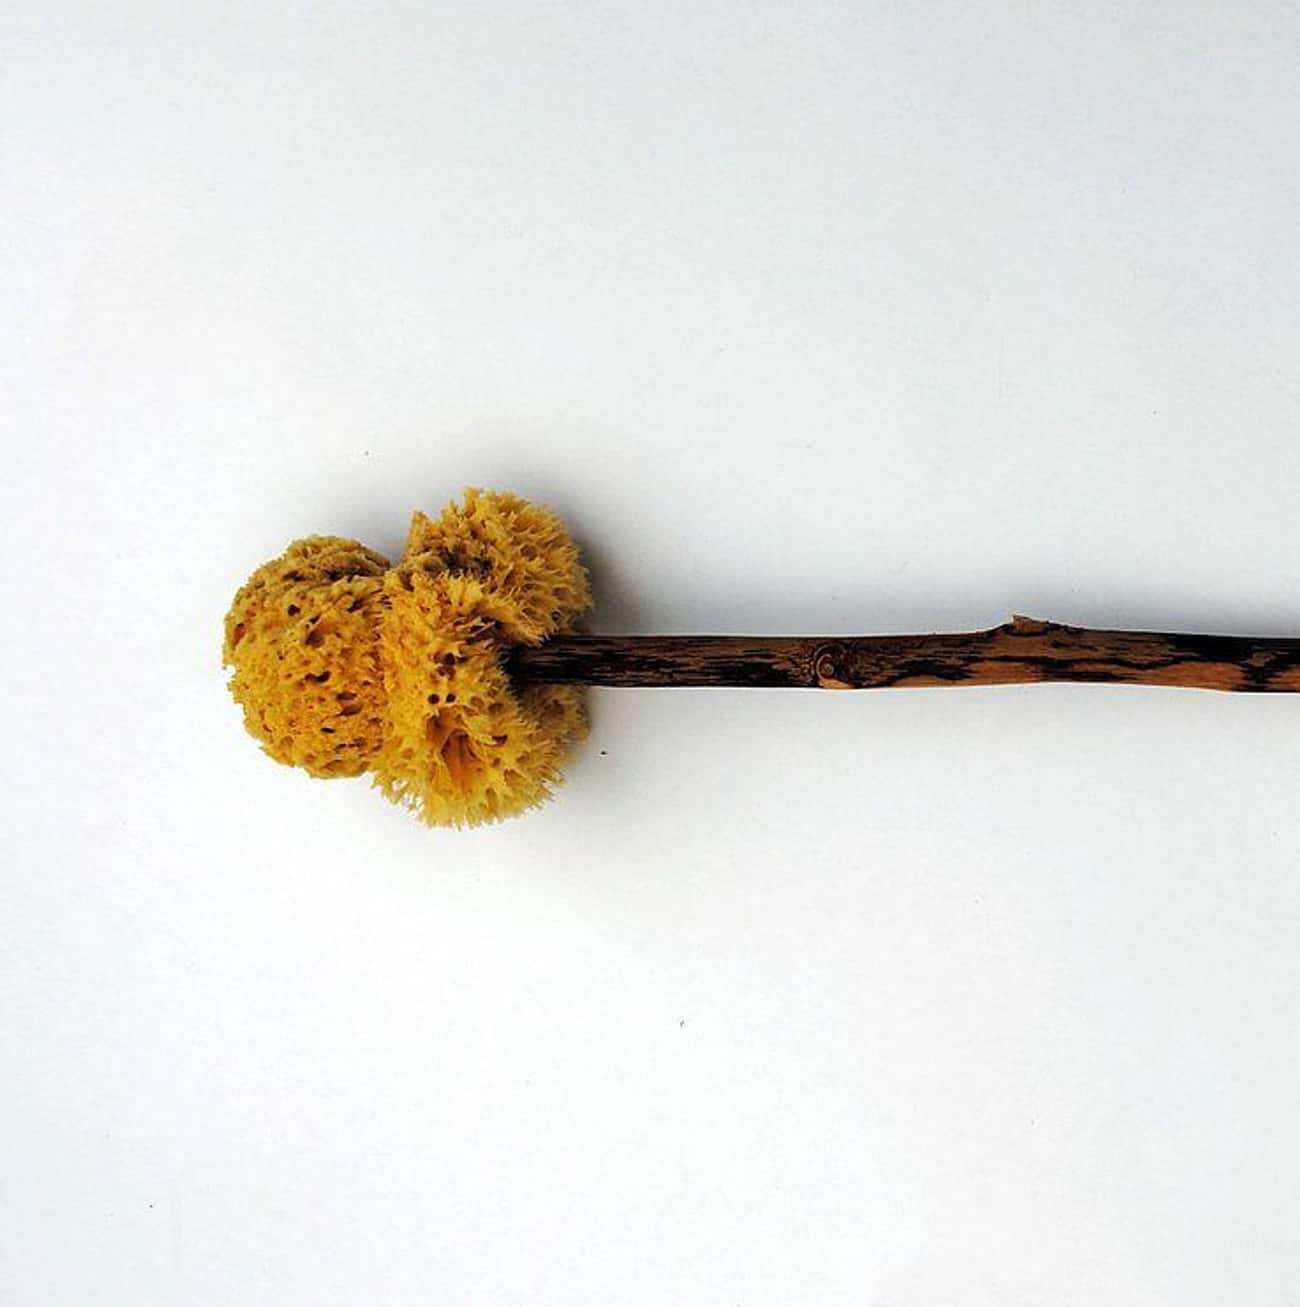 A Communal Sponge On A Stick